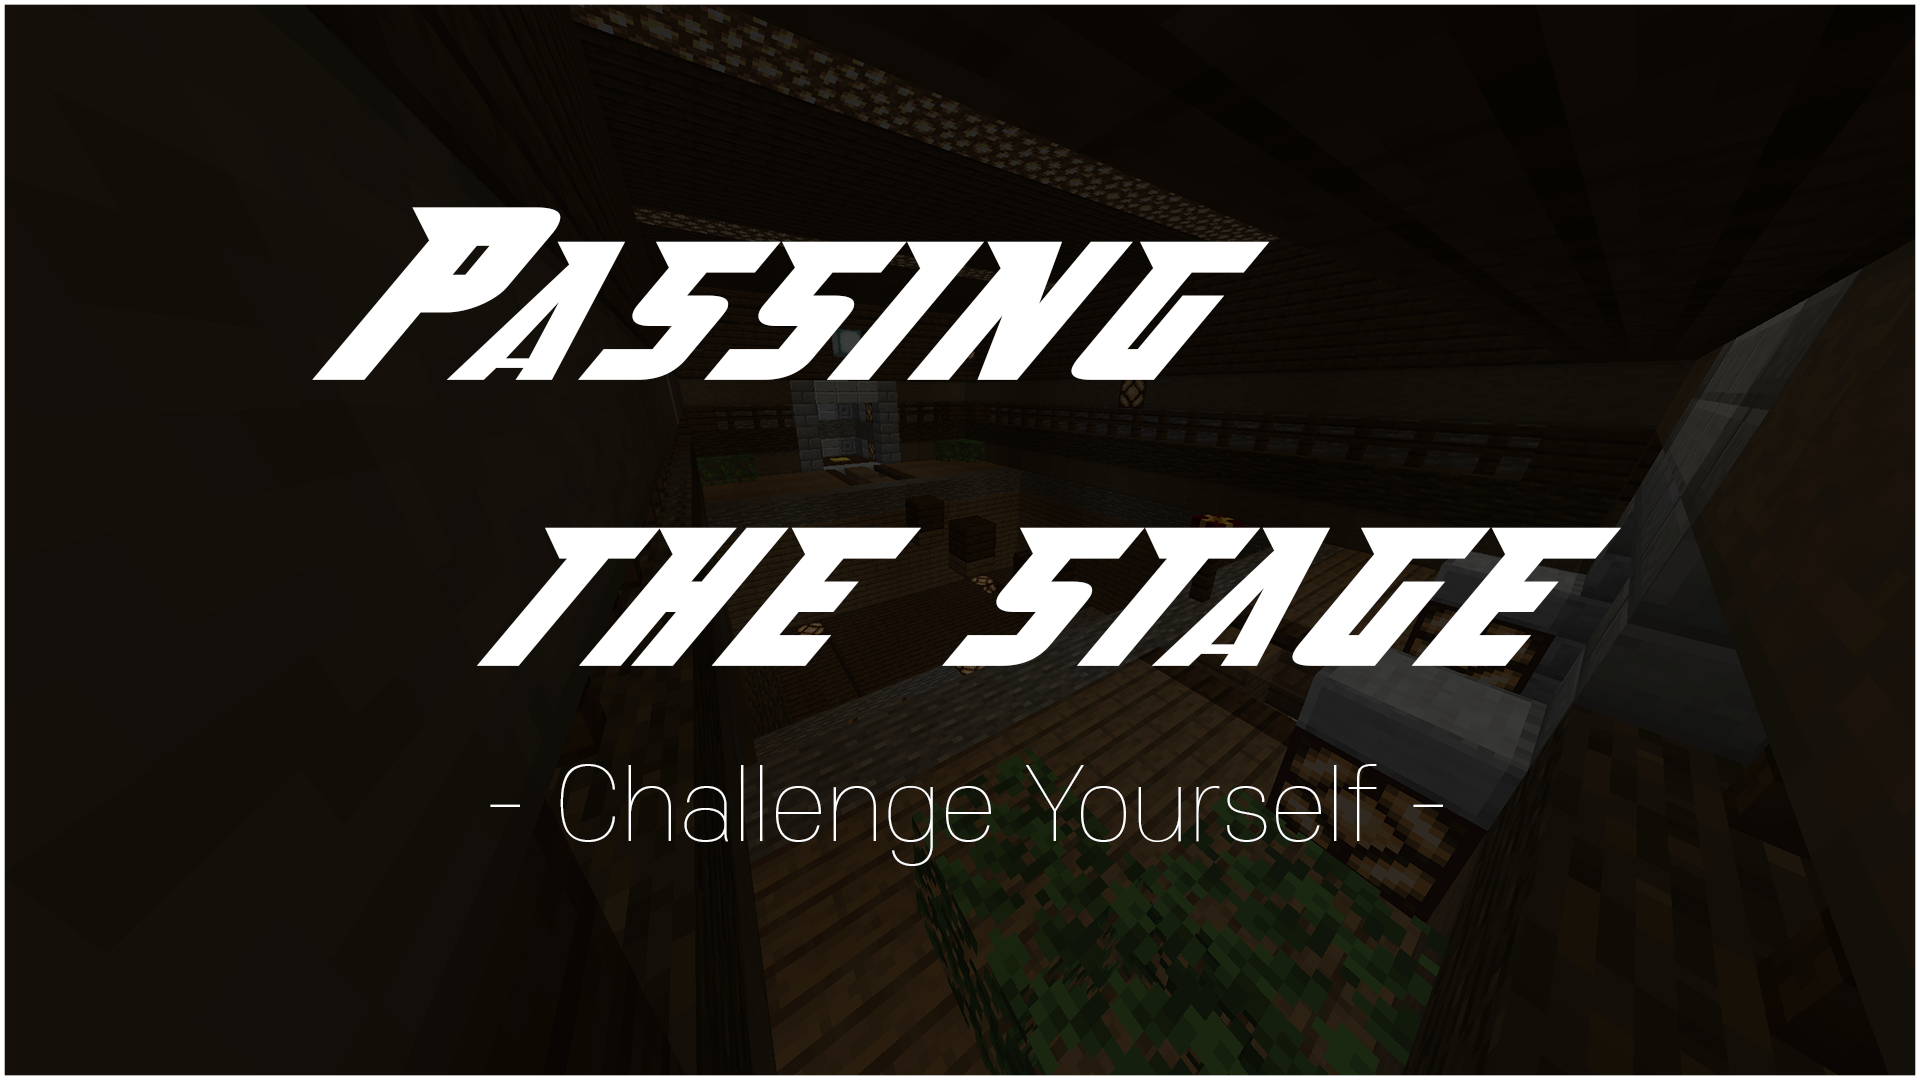 İndir Passing the Stage için Minecraft 1.15.2